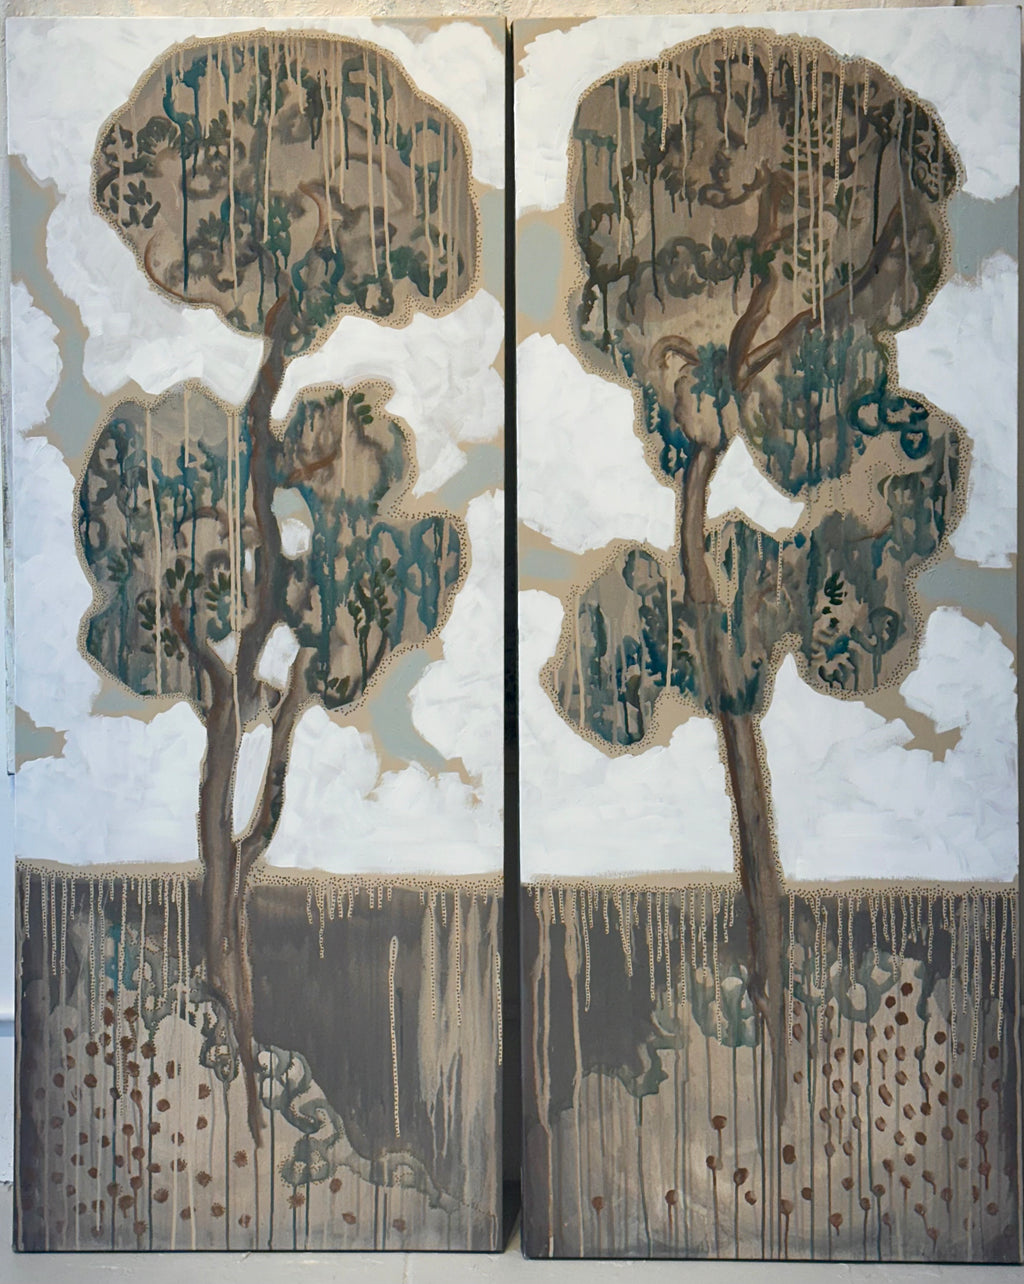 "The Uncommon Ones" 60" x 24" panels of trees